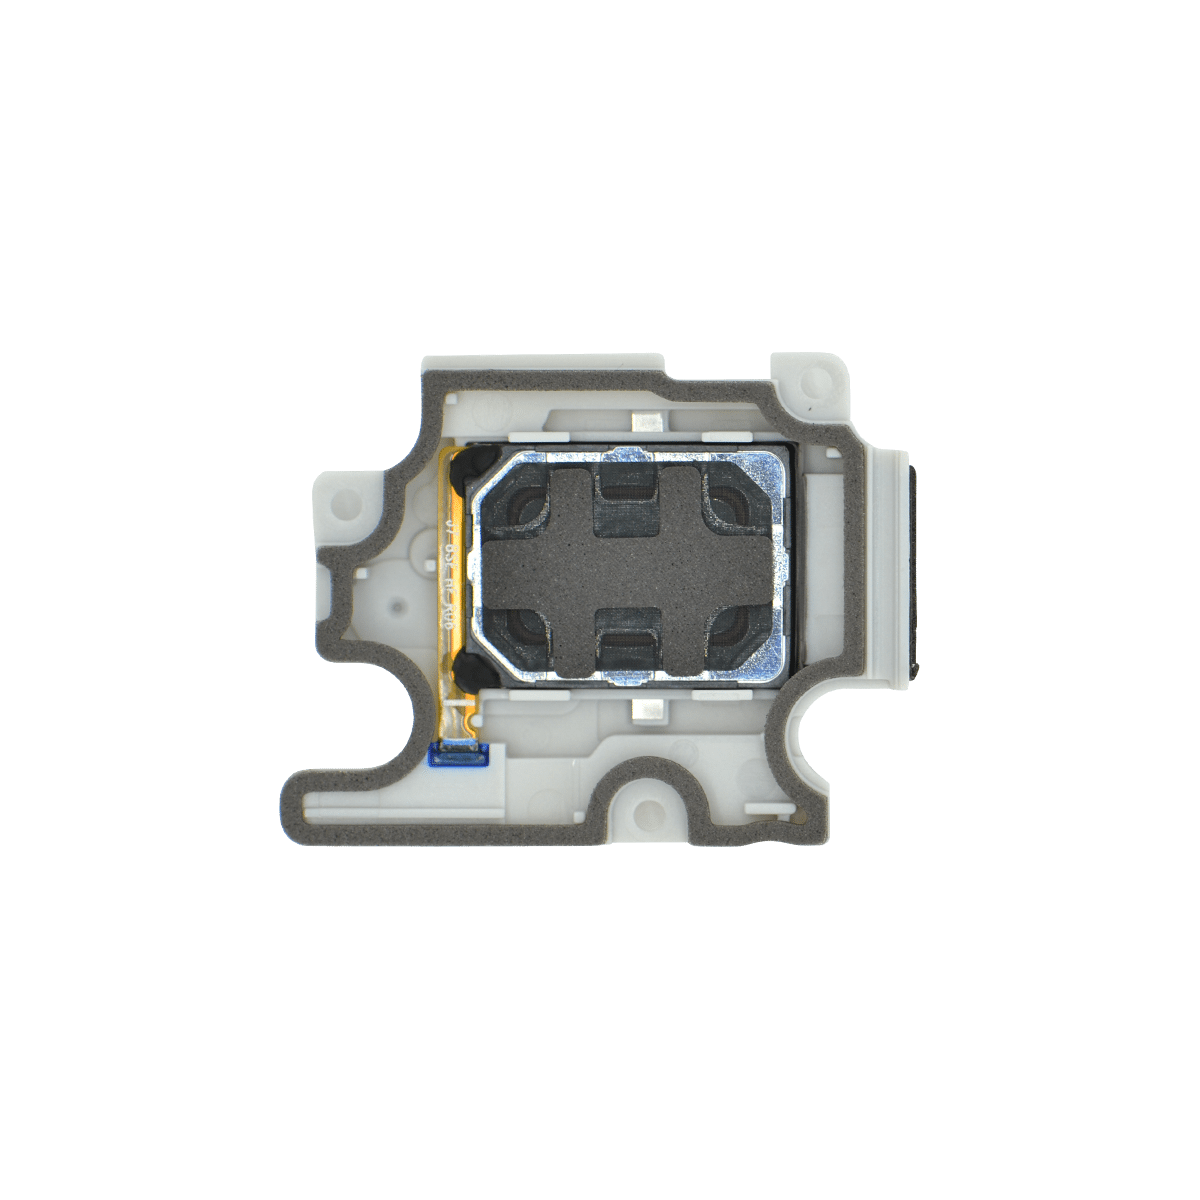 Samsung Galaxy J7 Pro (2017) Loudspeaker Replacement